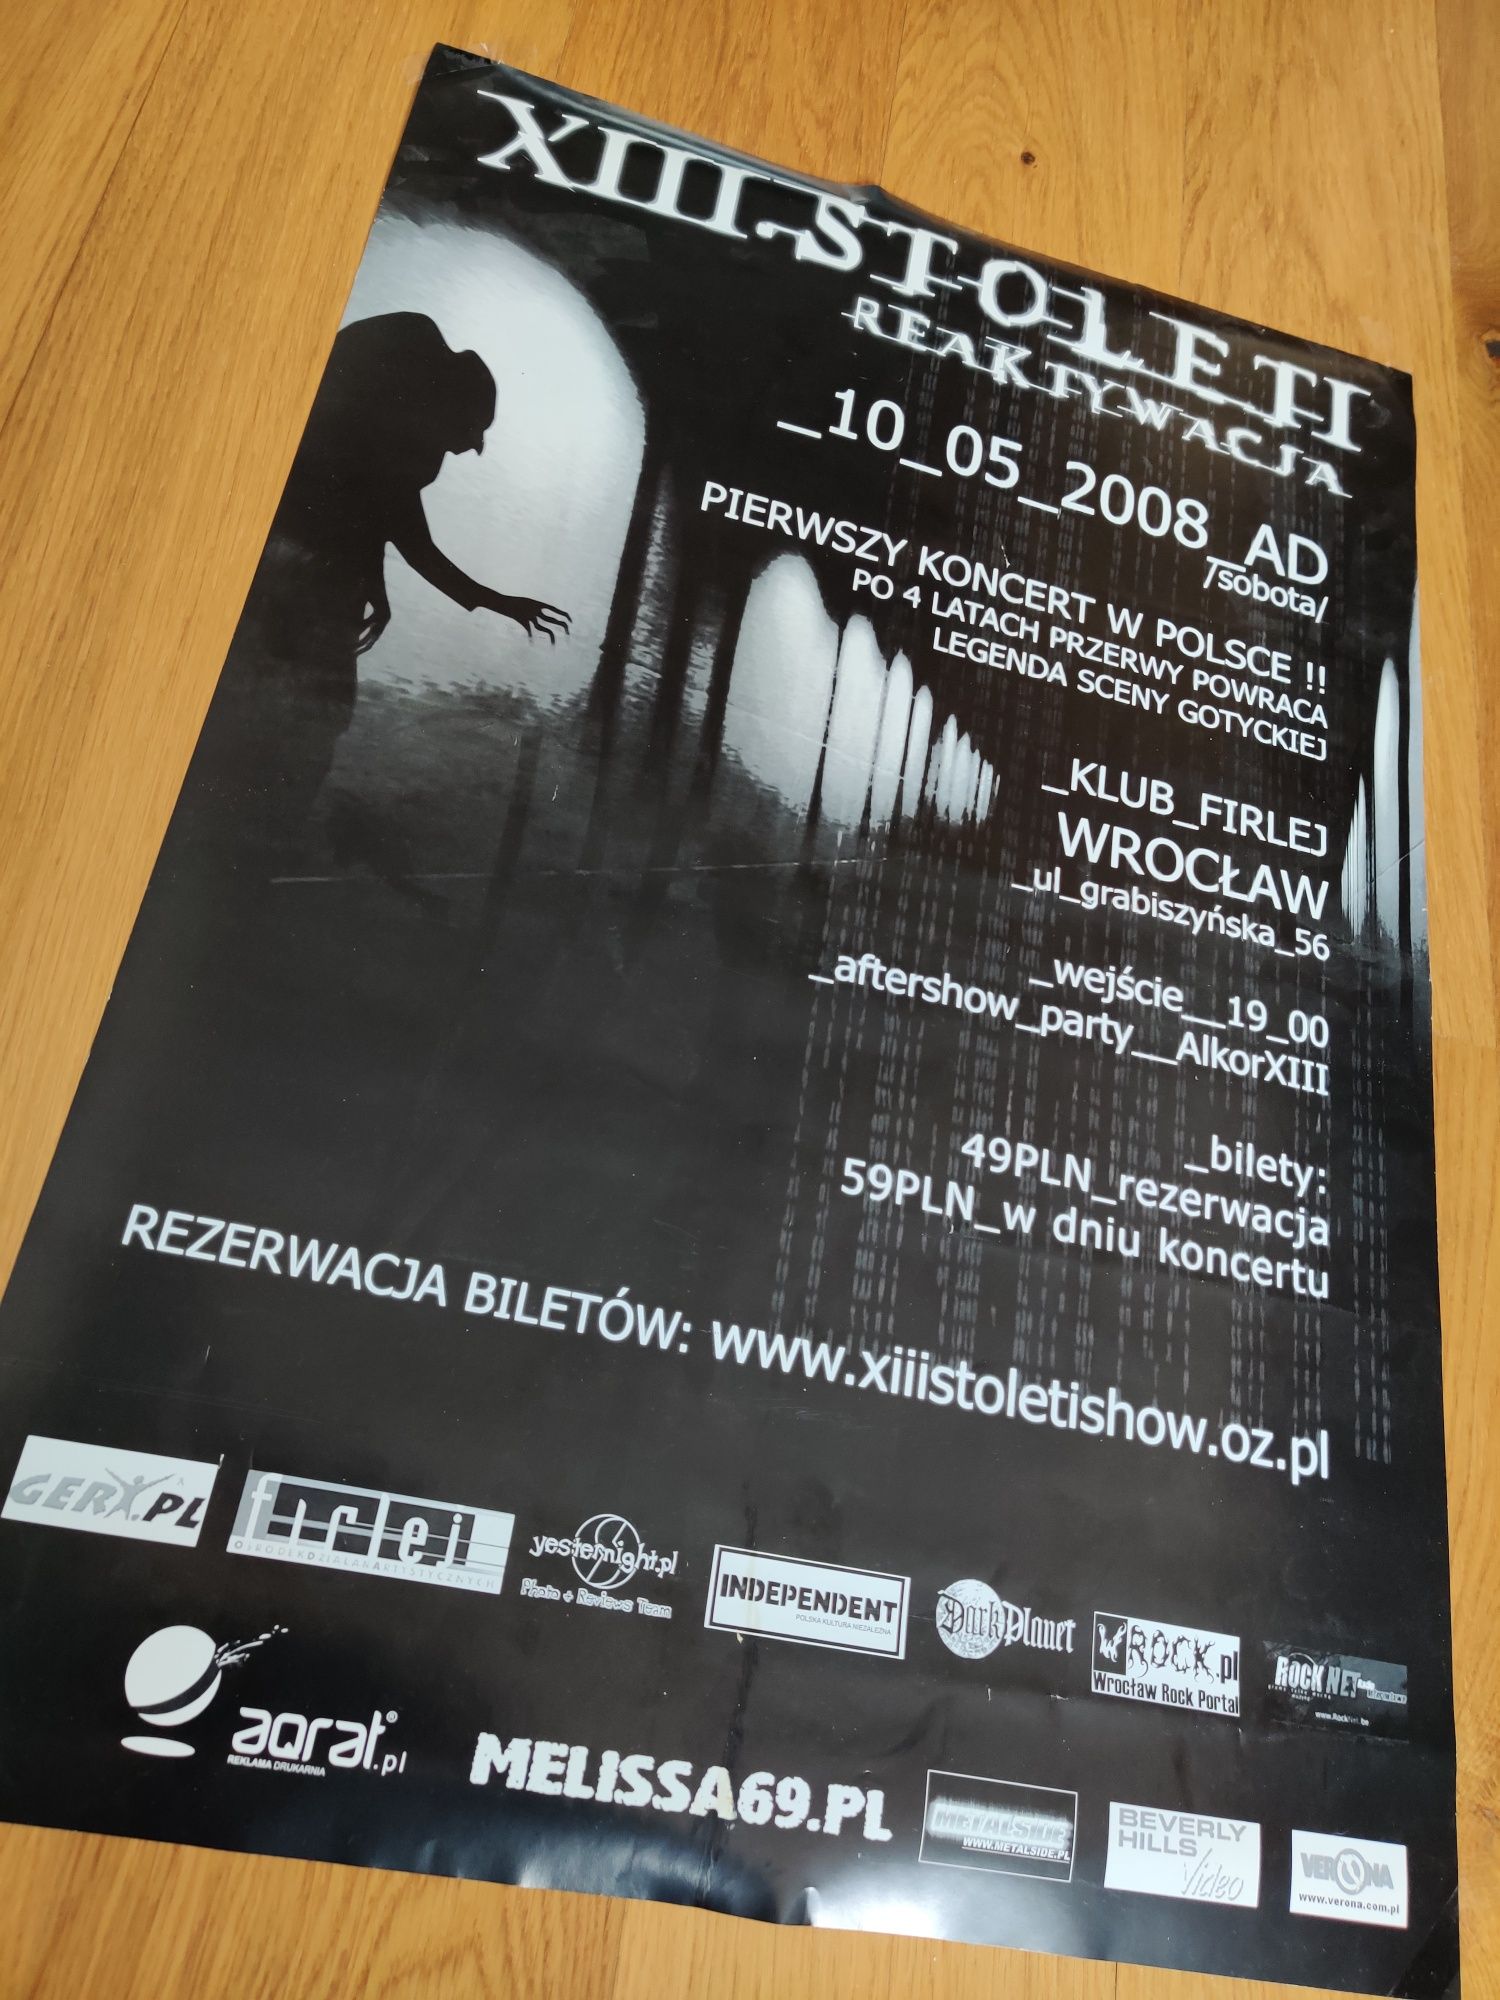 Plakat - XIII Stoleti koncert we Wrocławiu 10.05.2008r.